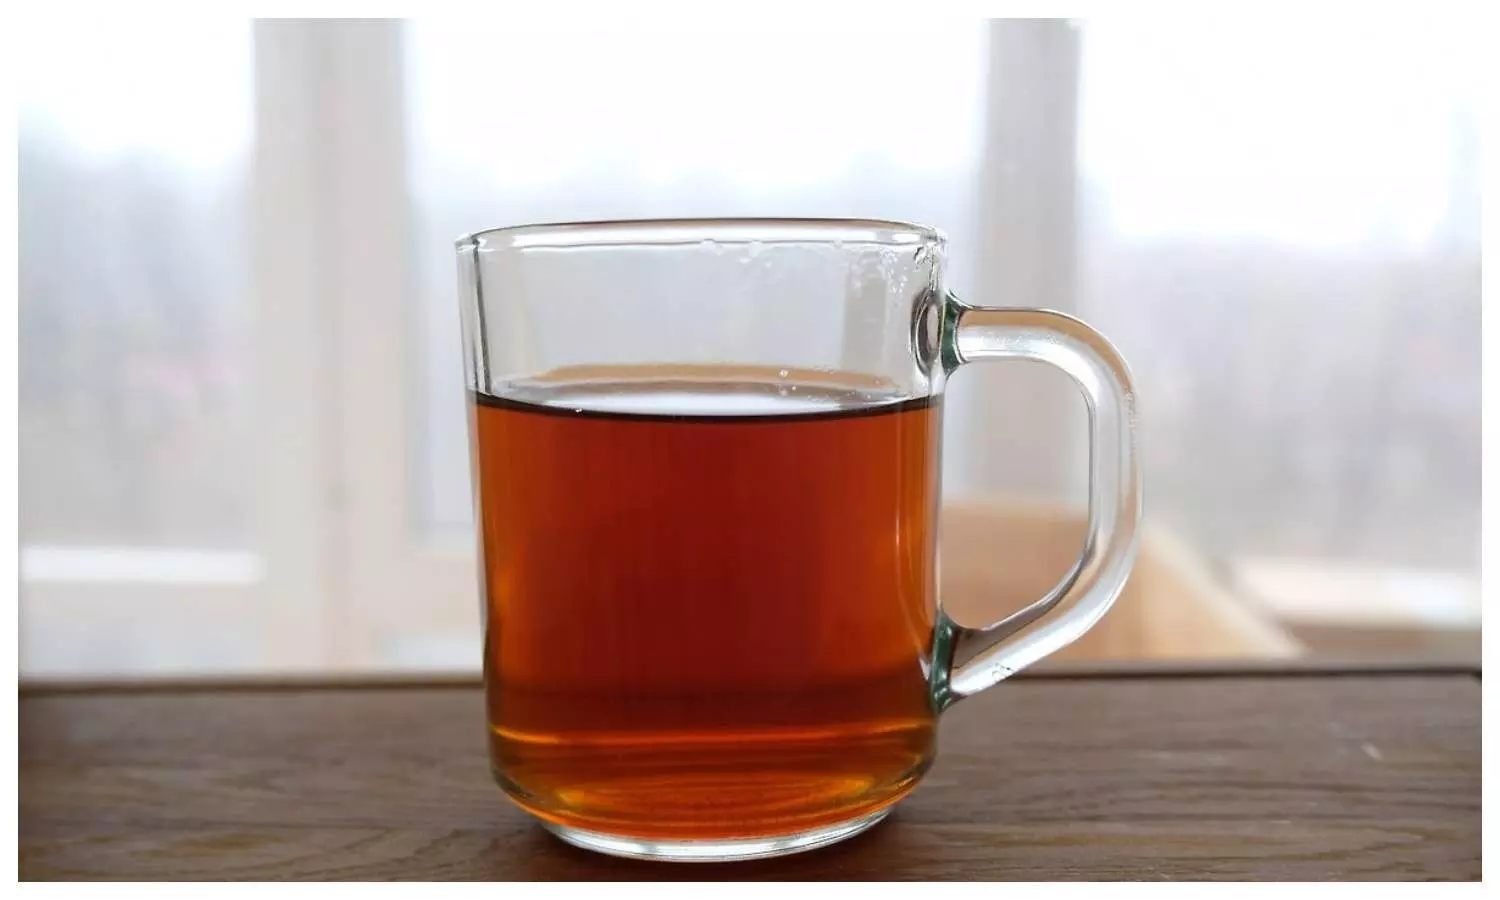 Tea reduces diabetes risk